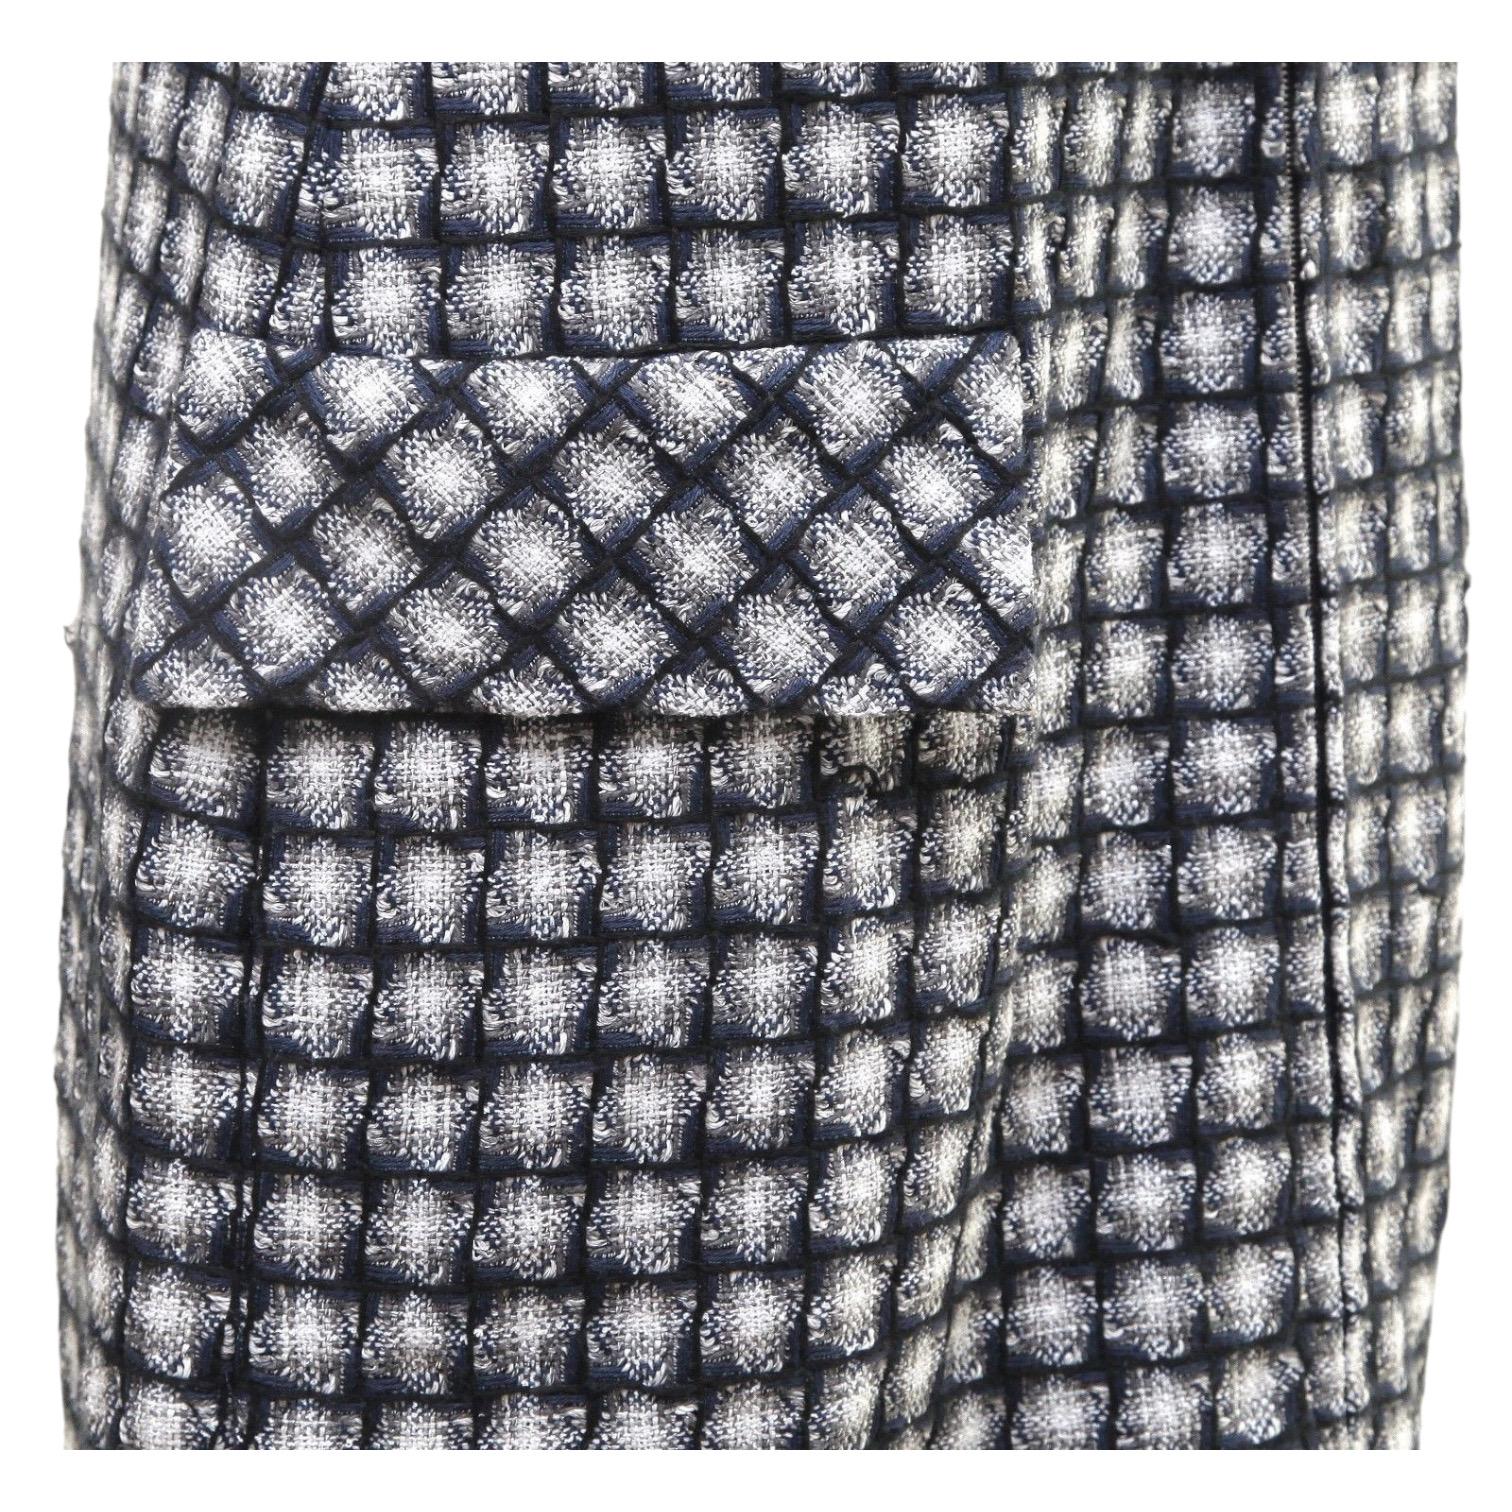 CHANEL Dress Tweed Knit Cap Sleeve Shift Zipper Multi Color Zipper Sz 40 For Sale 2